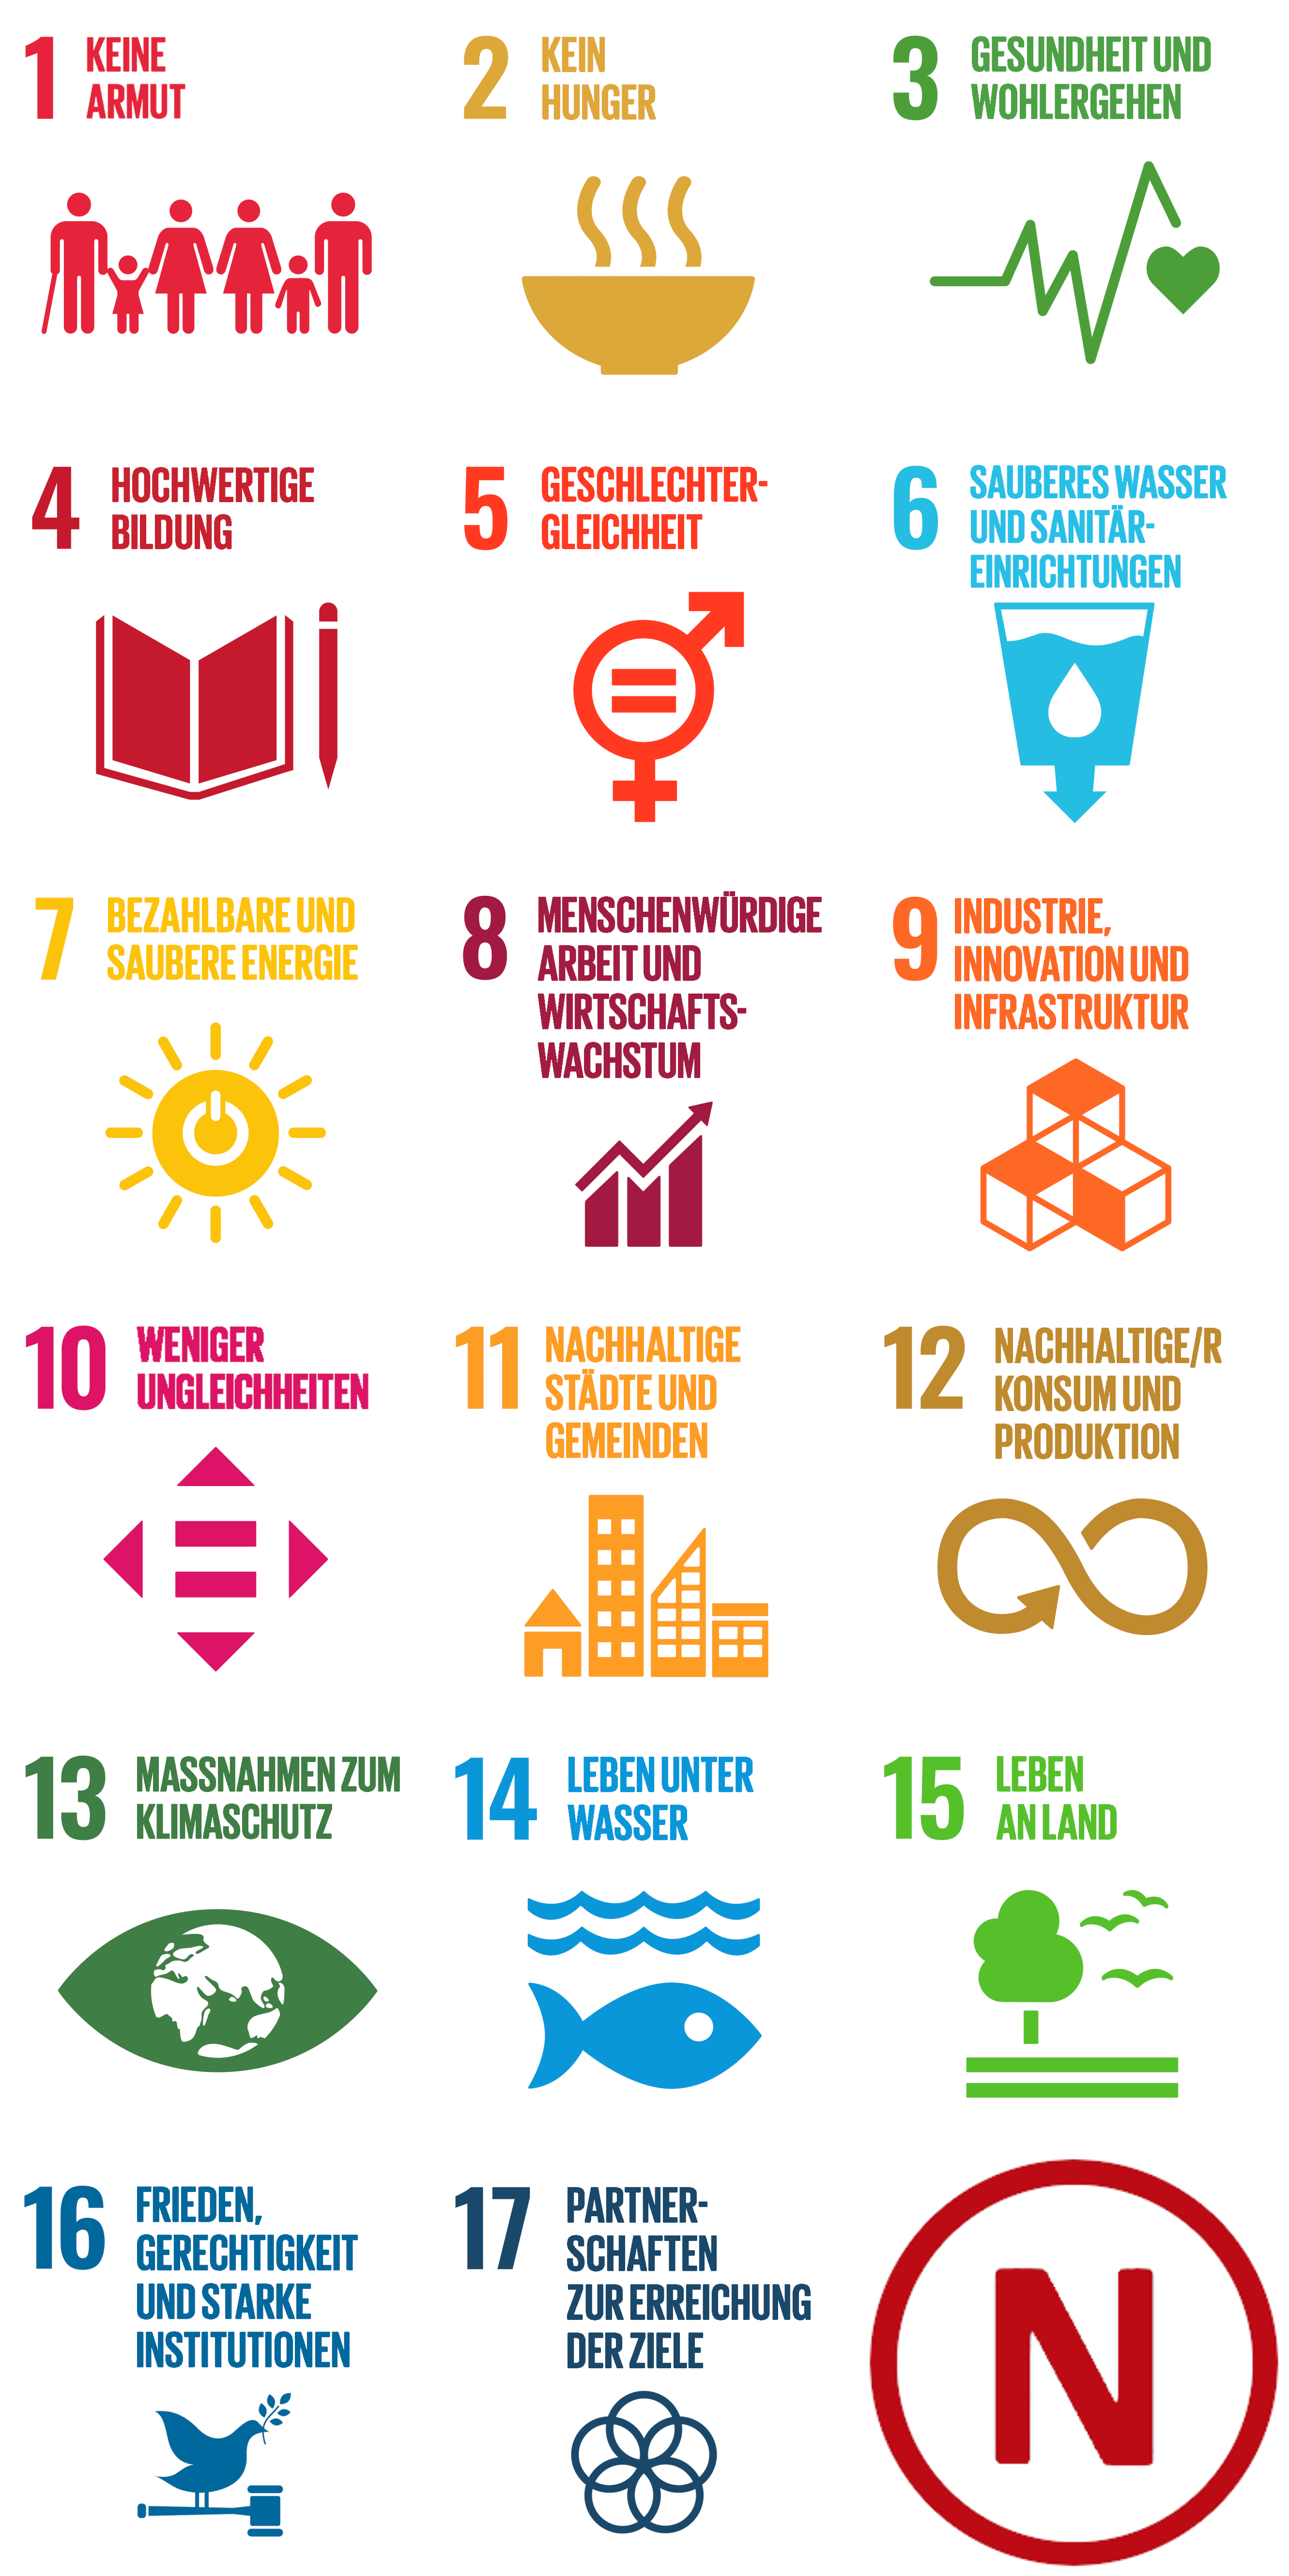 Abbildung 1: SDG Icons inverted